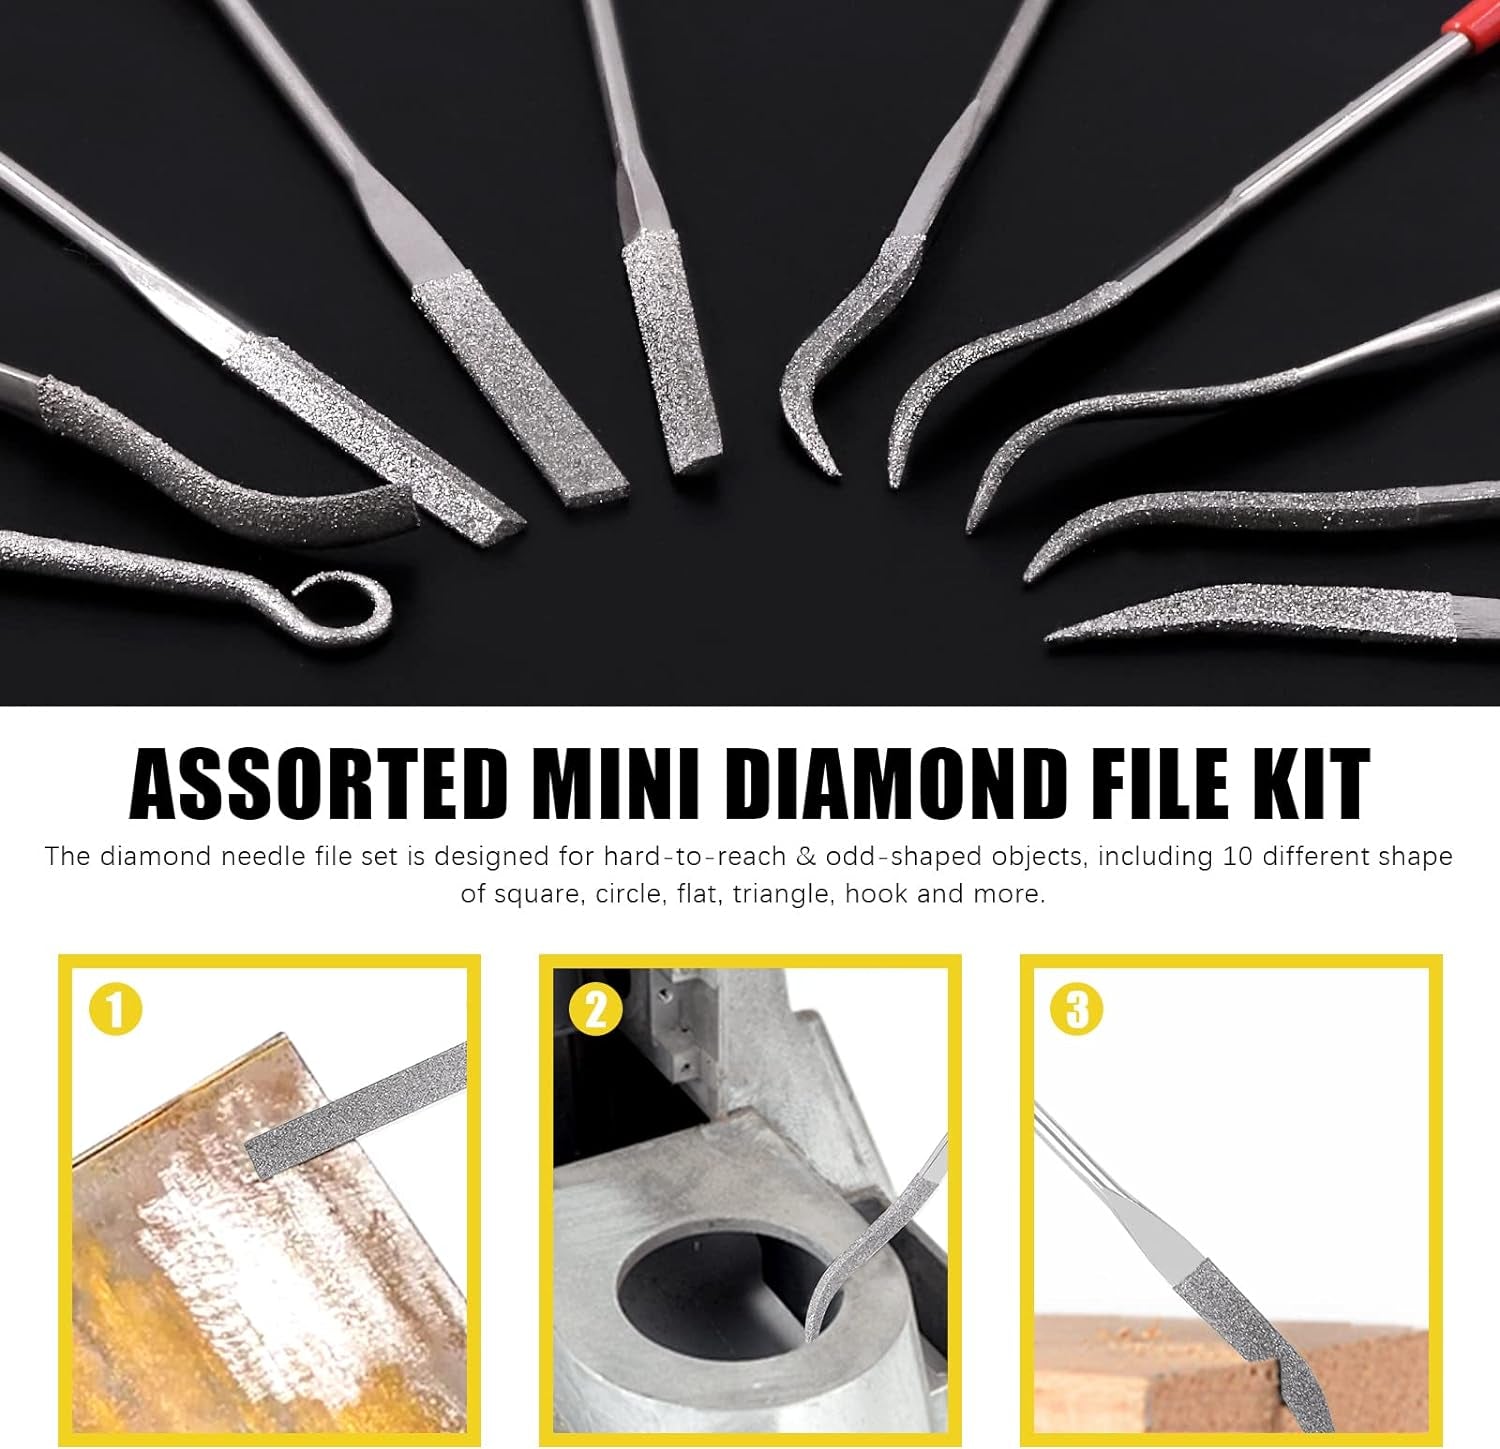 11 Pcs Mini Diamond File Assorted Set Contains Small Flat Needle Square round Shape Rifler Files, Multipurpose Needle File Set with Bonus Cutter for Woodworking, Sanding, Jewelers, Metal